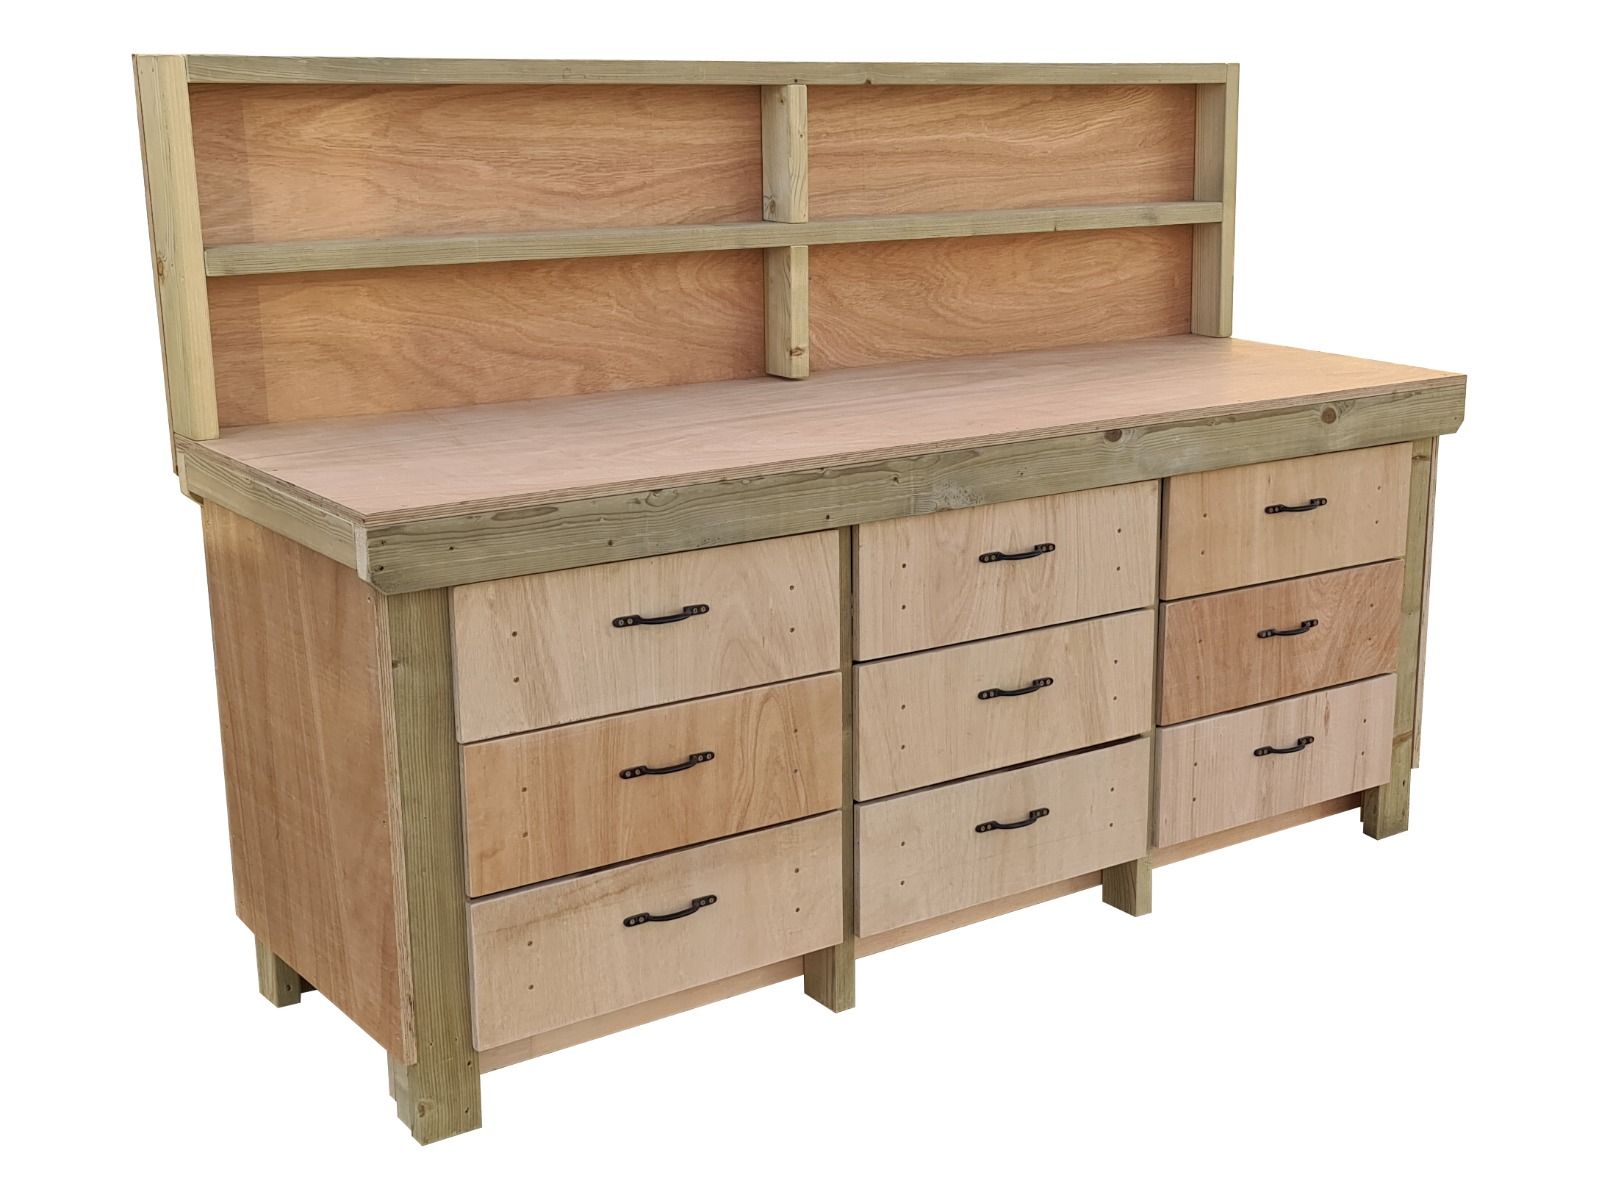 4ft Double Shelf Wooden Workbench Tool Cabinet with Lockable Cupboard 18mm Eucalyptus Hardwood Top